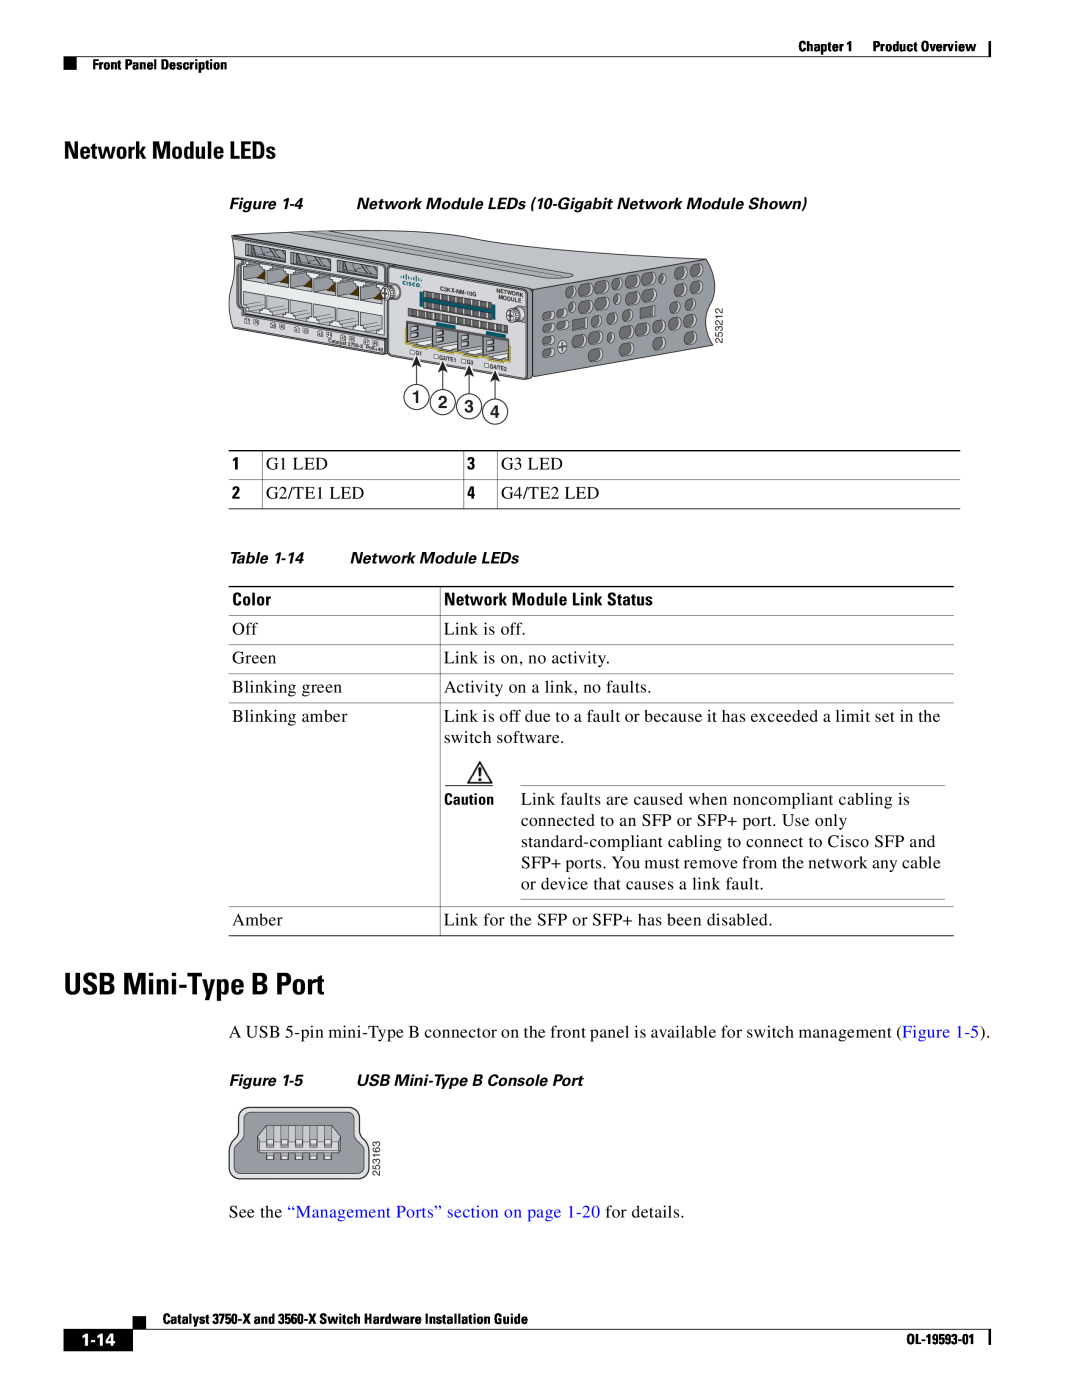 Cisco Systems 3750-X, 3560-X manual USB Mini-Type B Port, Network Module LEDs, 1 2 3, 1-14 